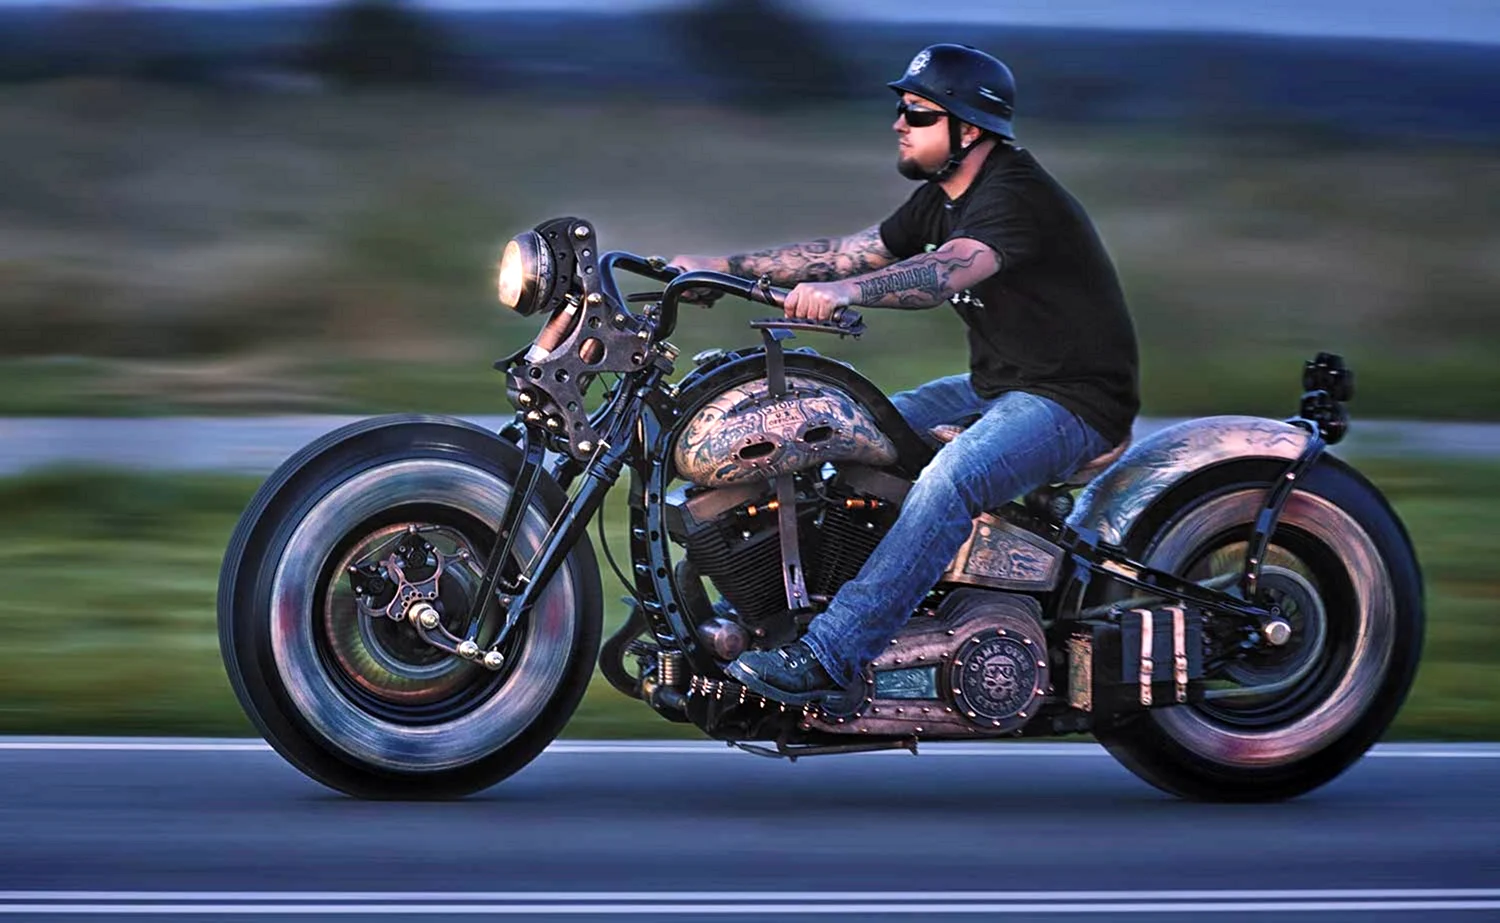 Motor Harley Davidson Cycles мотоцикл